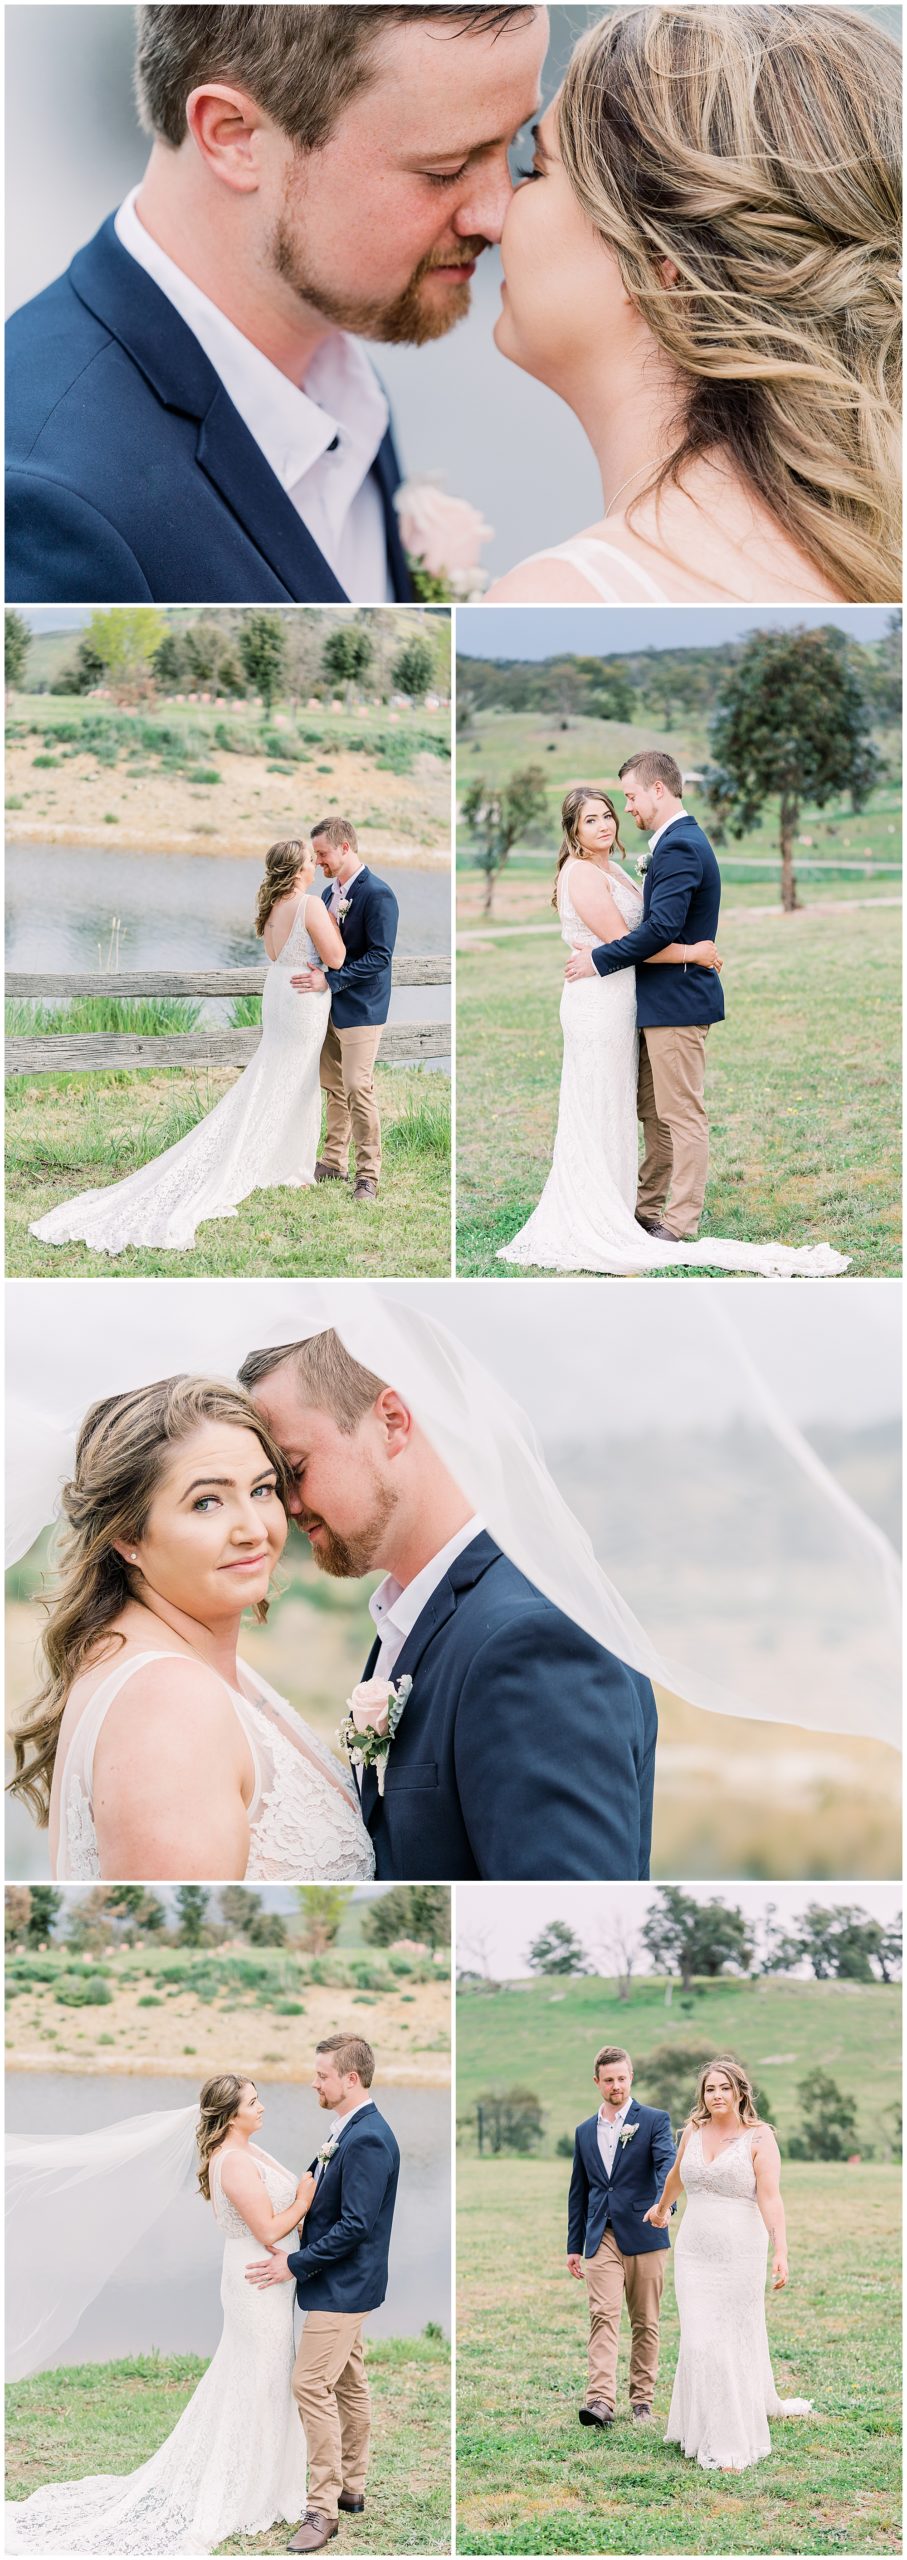 Wedding photos at The truffle farm Canberra